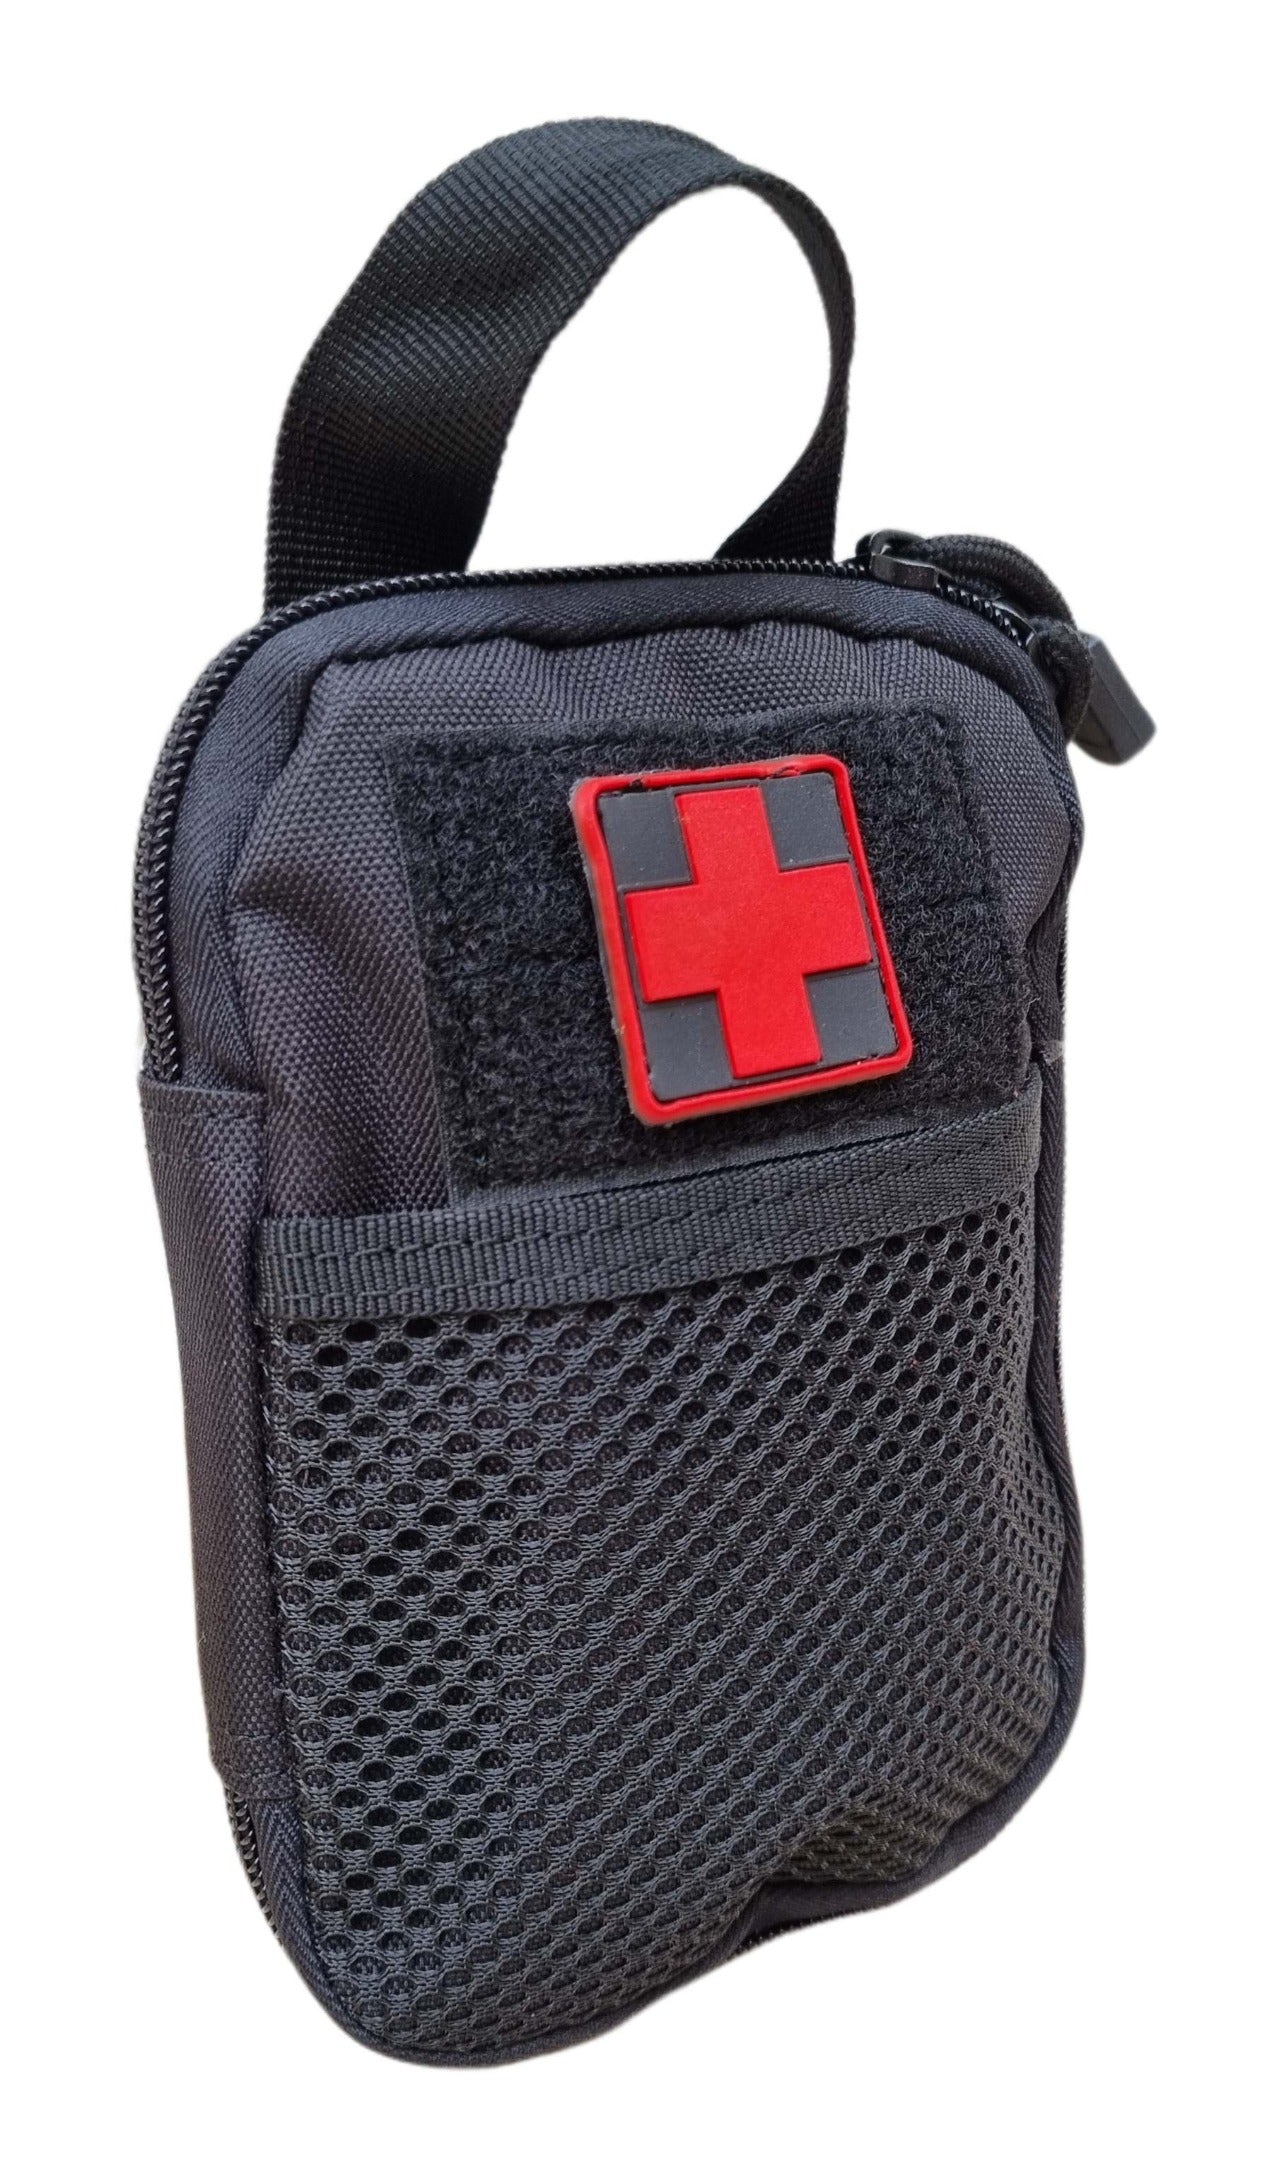 Botiquín Primeros Auxilios Go Pack Mini ProSafety Mx